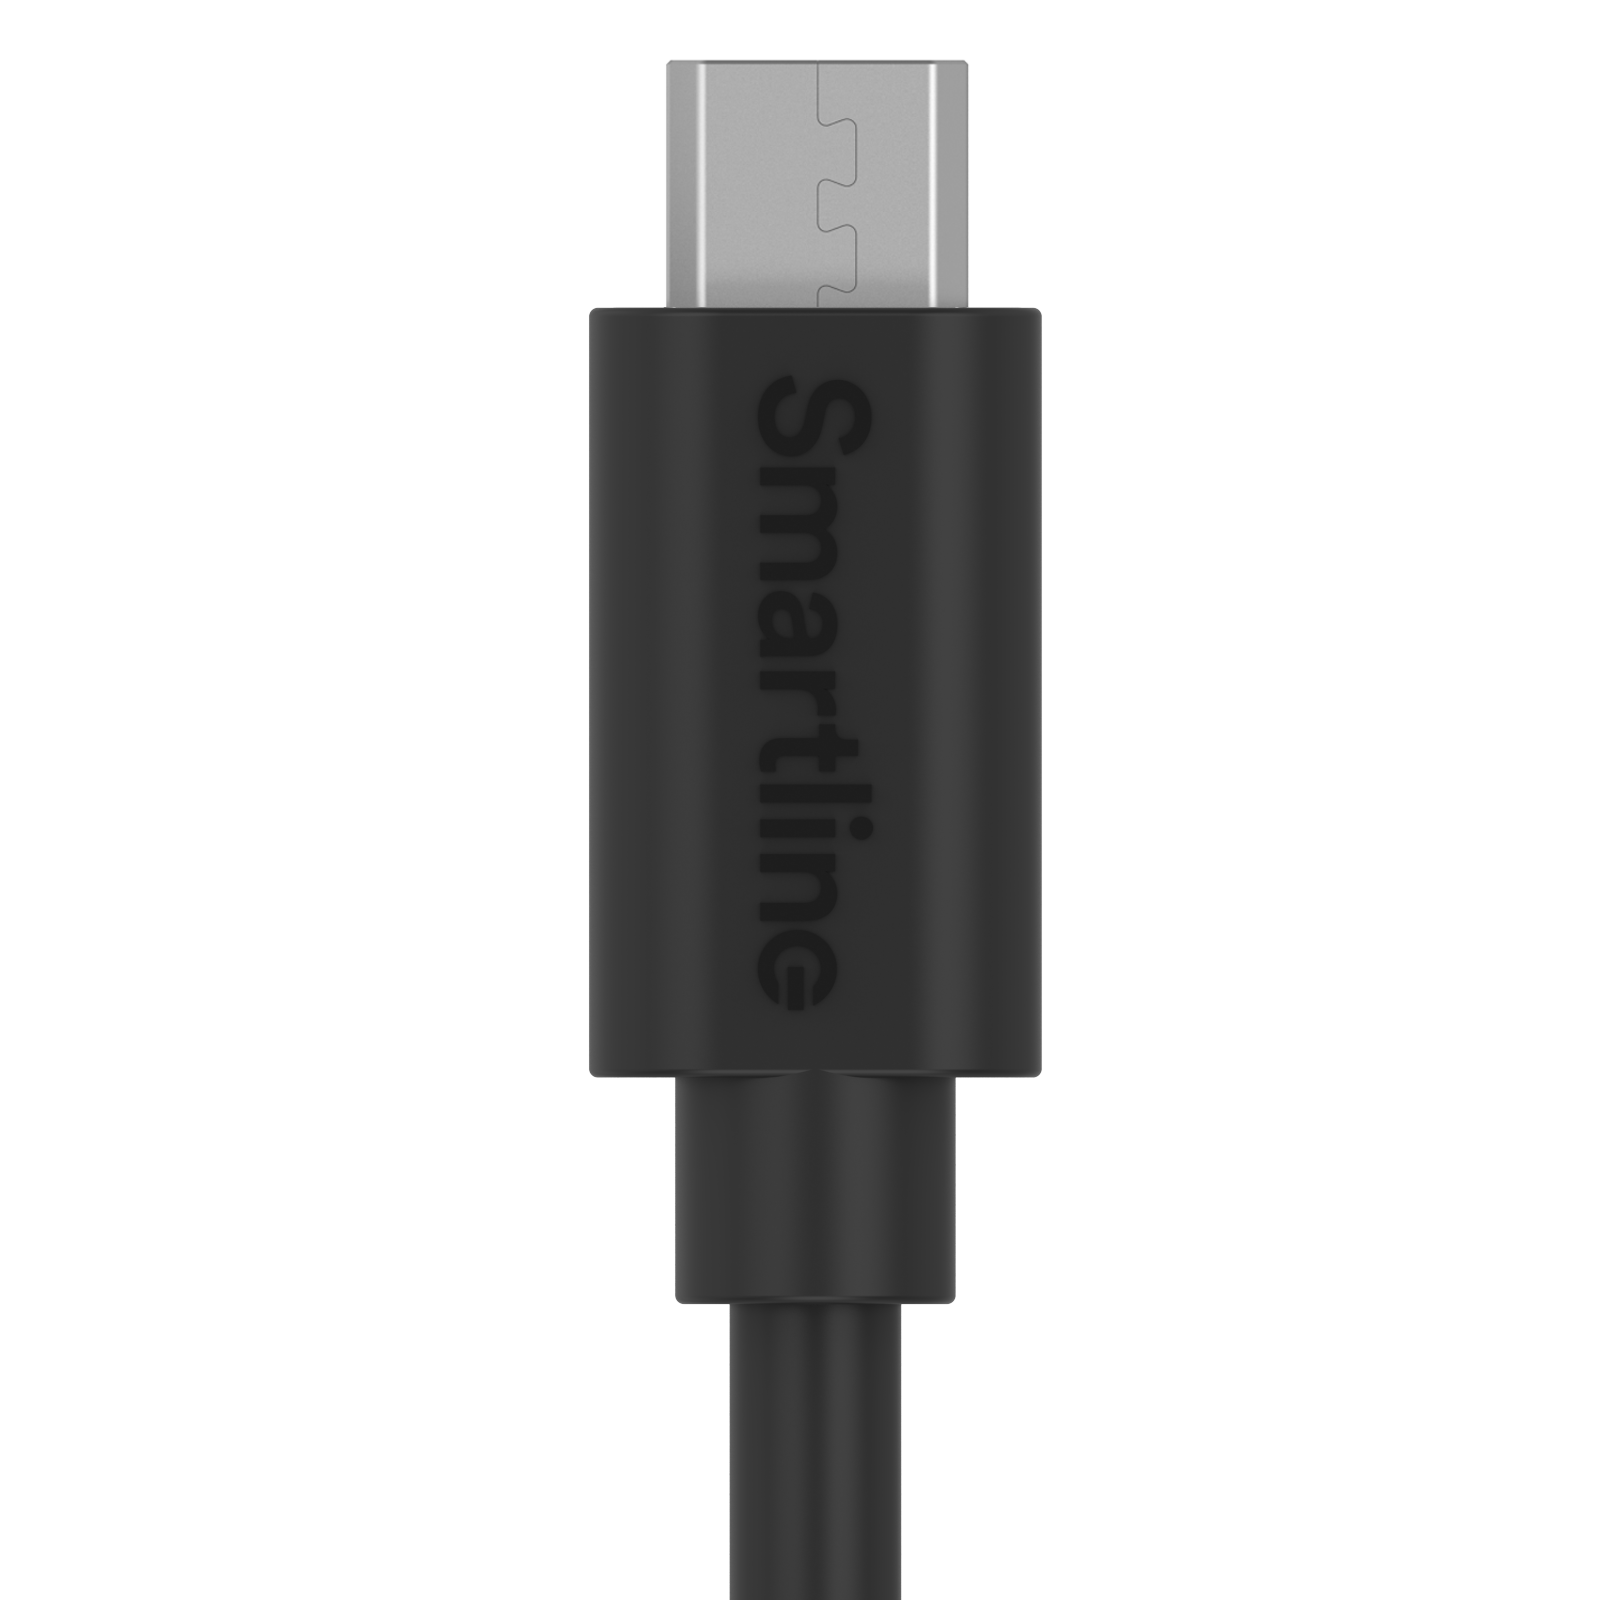 USB Cable MicroUSB 2m sort